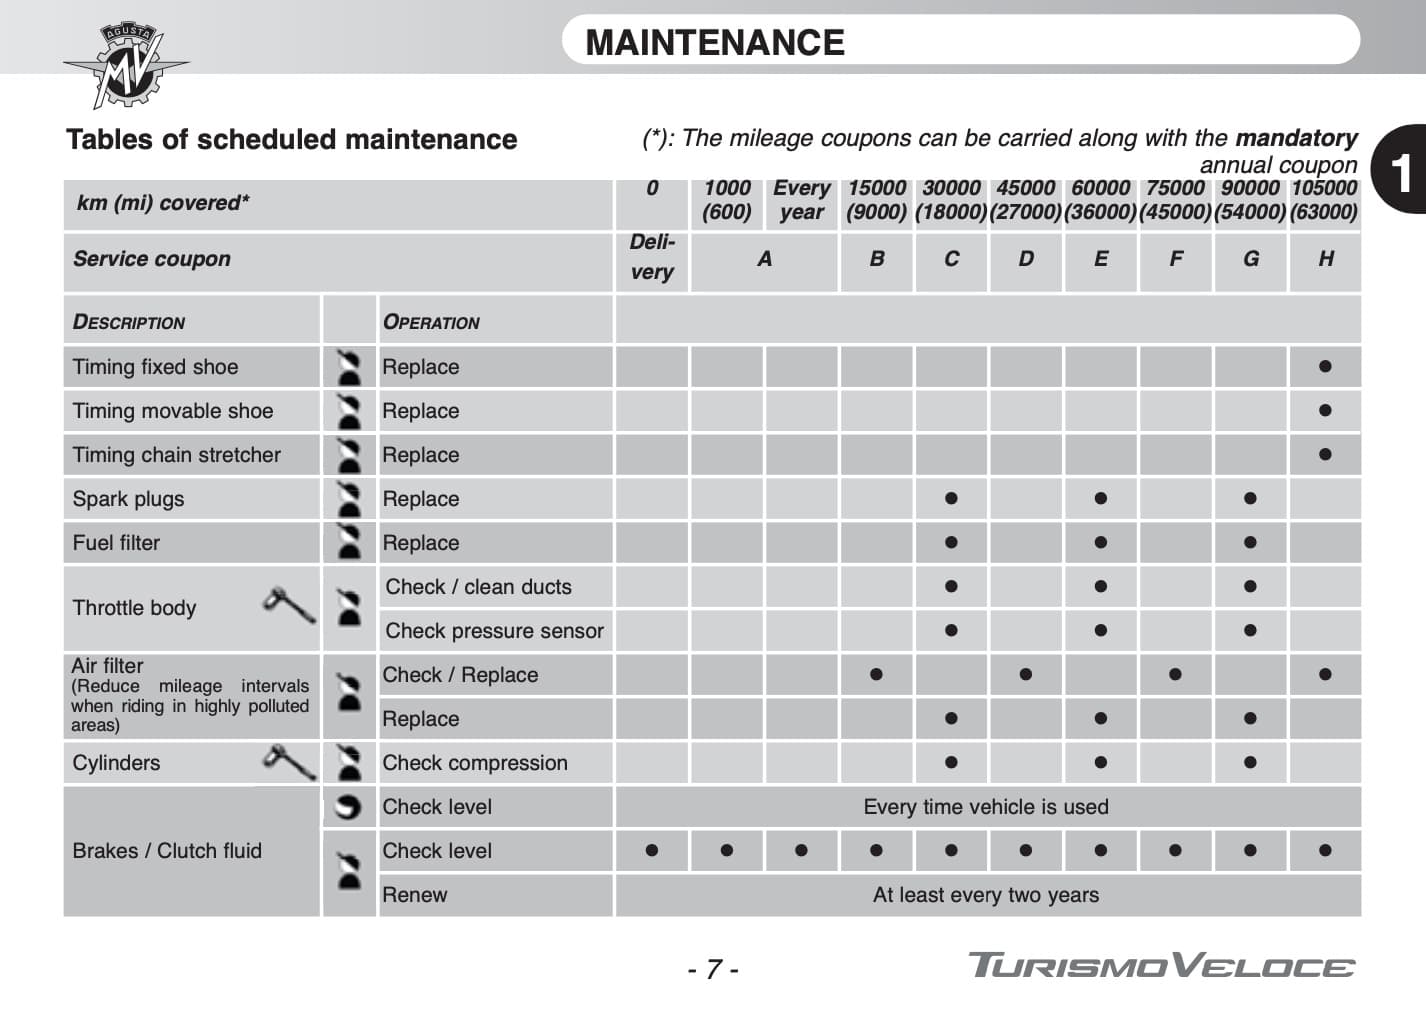 MV Agusta turismo veloce maintenance schedule manual screenshot 2